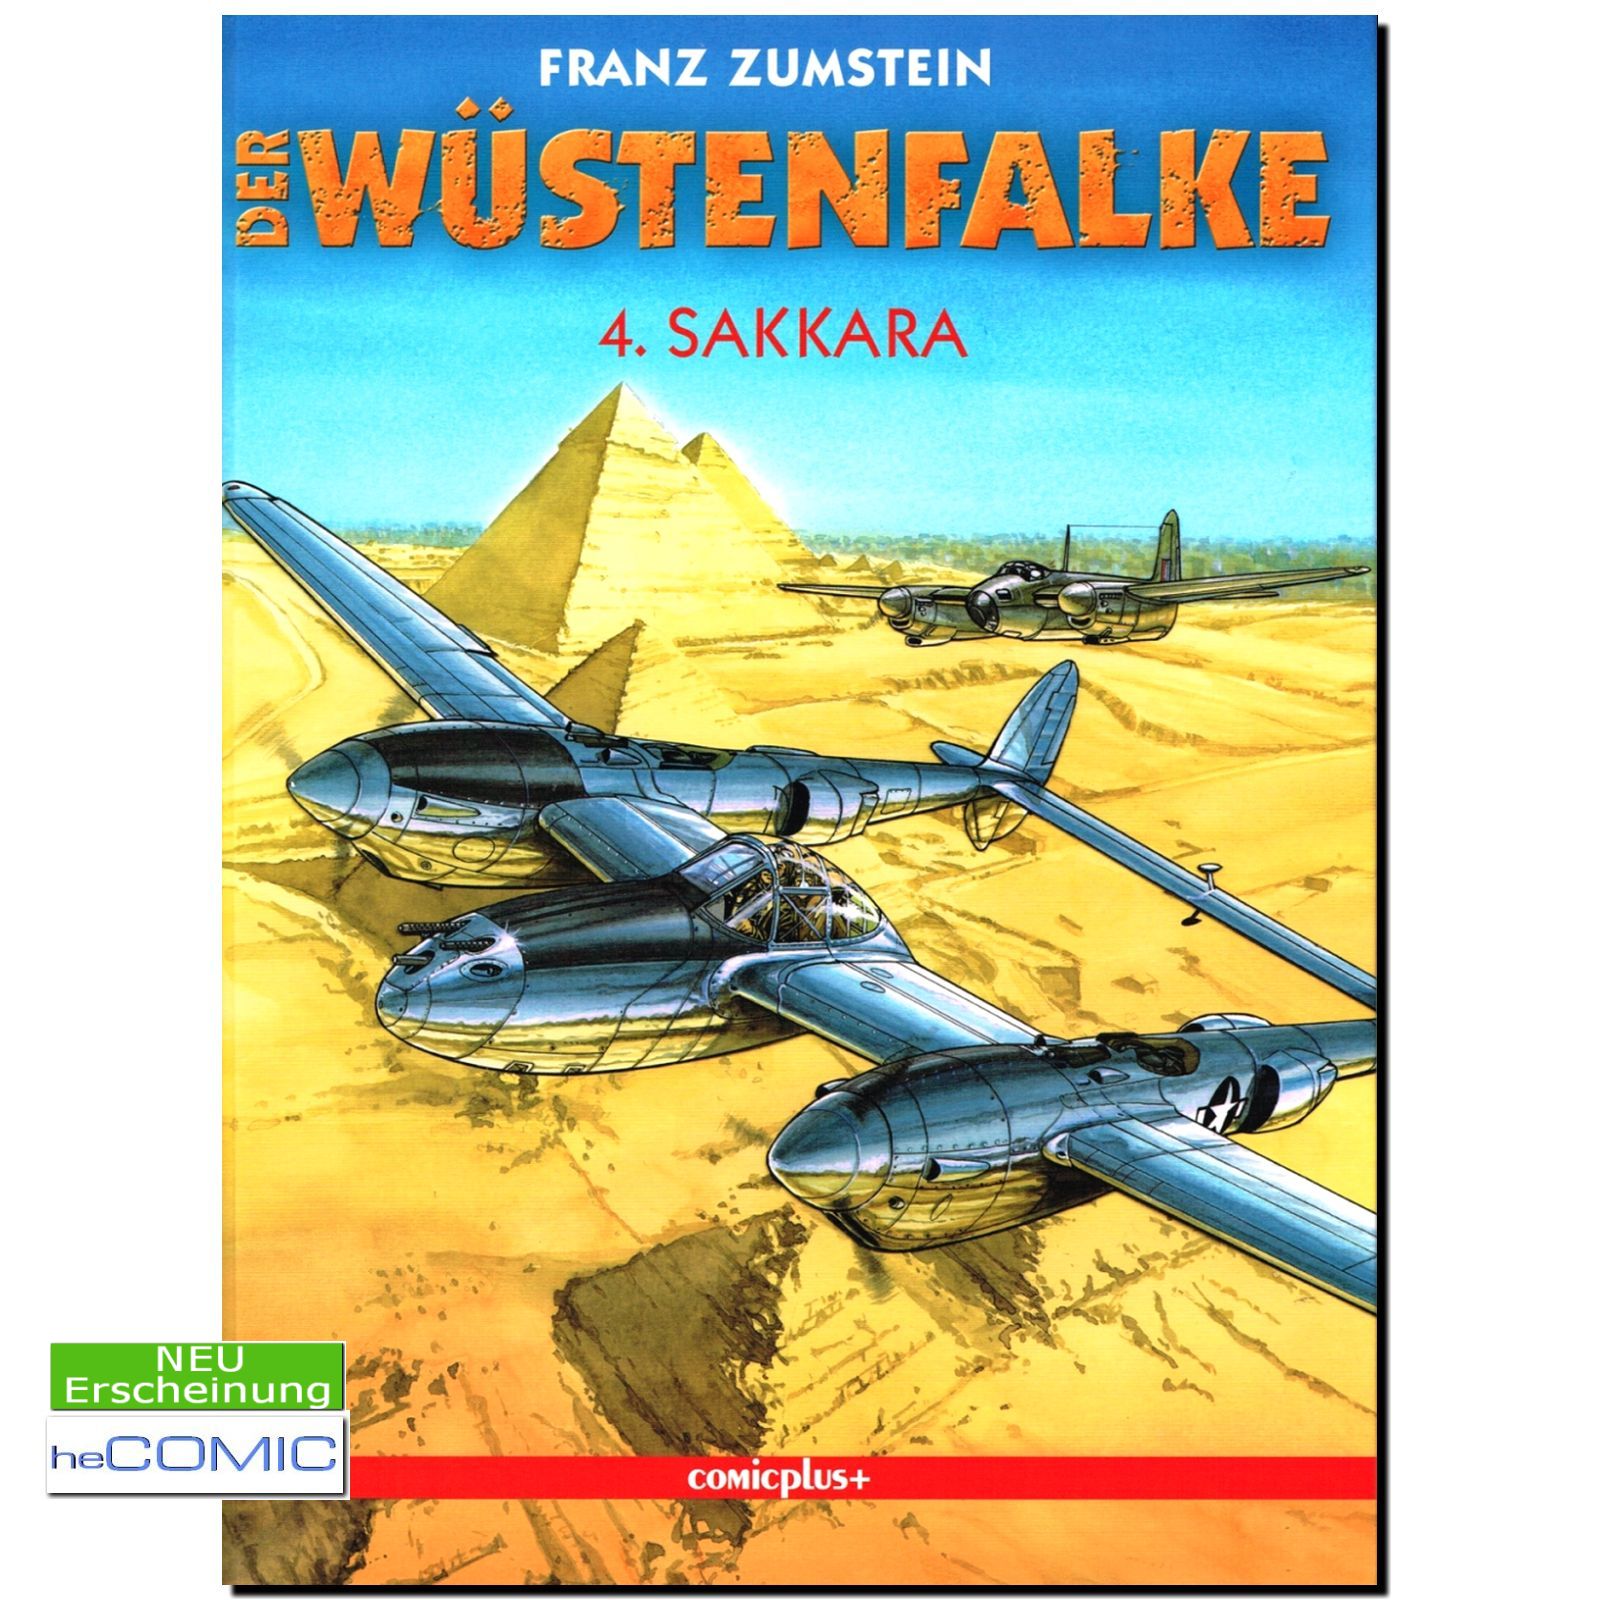 Fliegerstaffel-Der Wüstenfalke-4-History-Pilotenhero